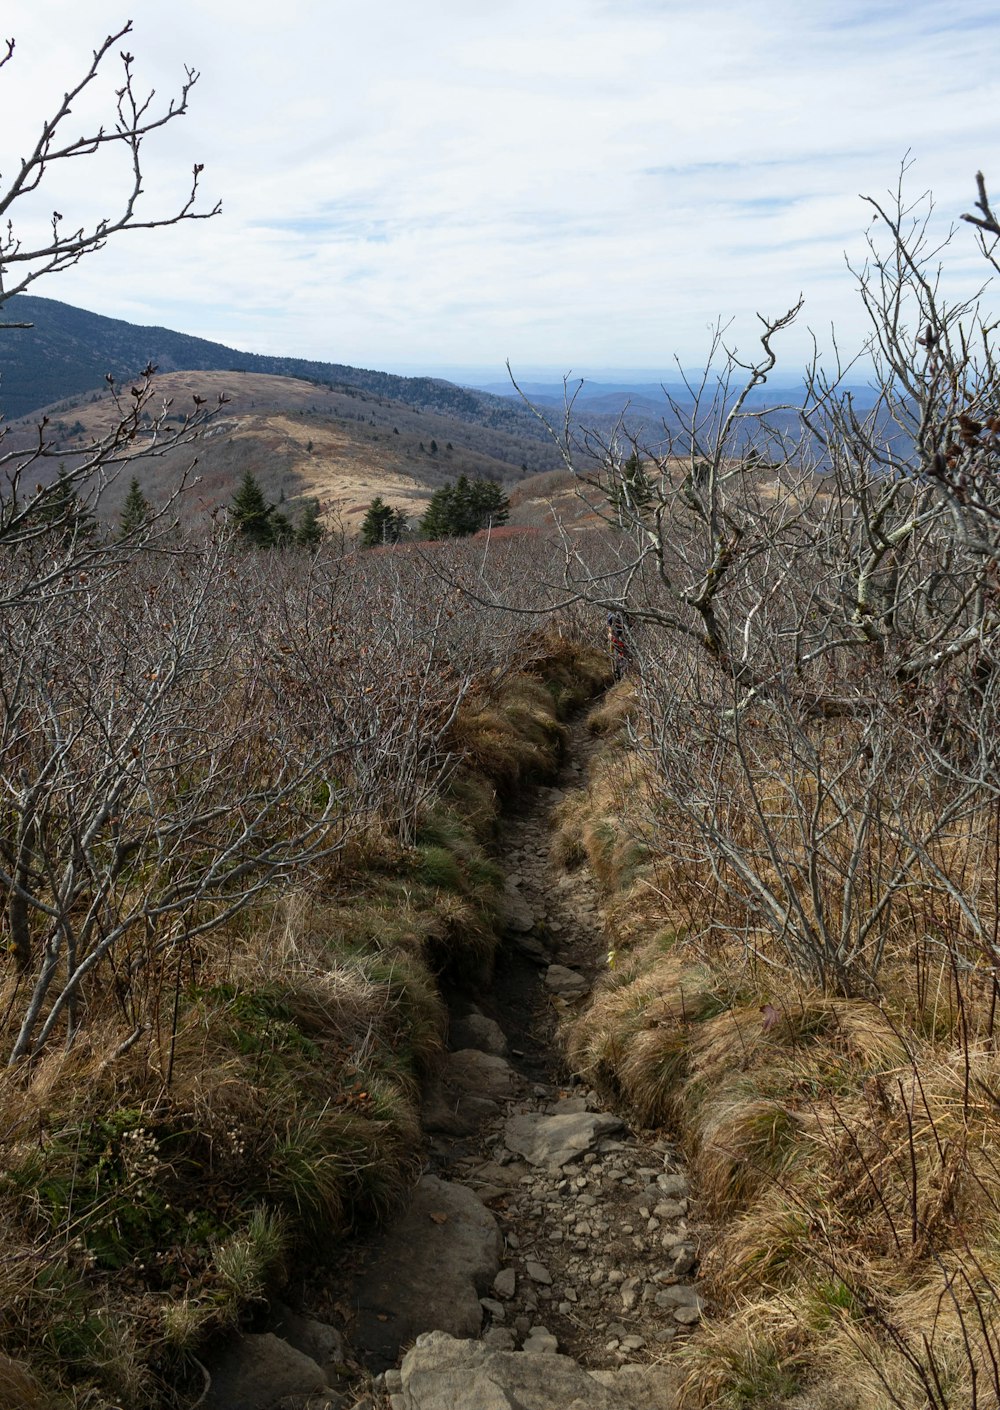 a rocky path through a dry landscape